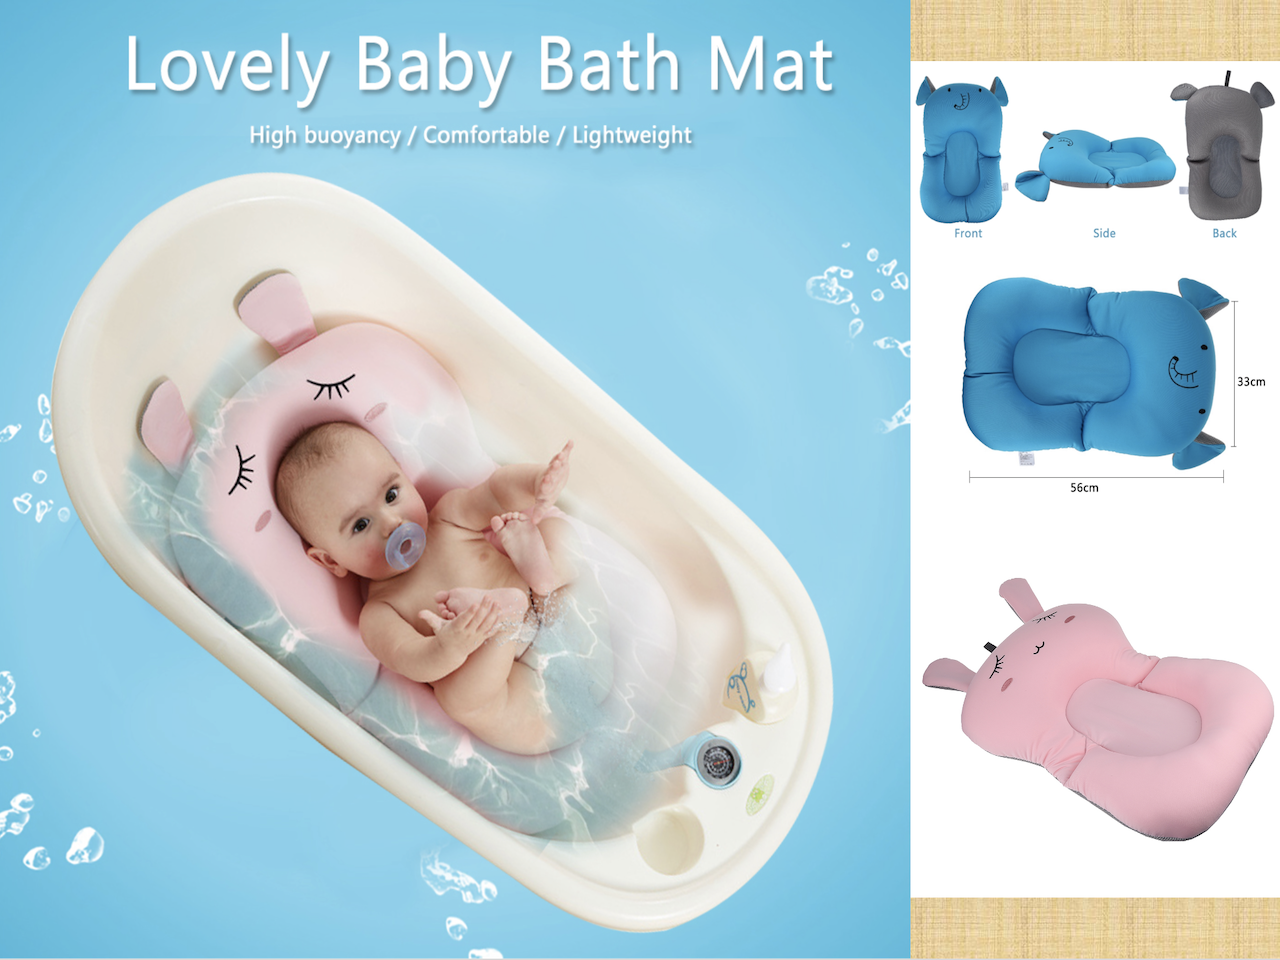 morninsin) almohadilla para bañera de bebé, ducha, asiento de baño  antideslizante, cojín KEQ